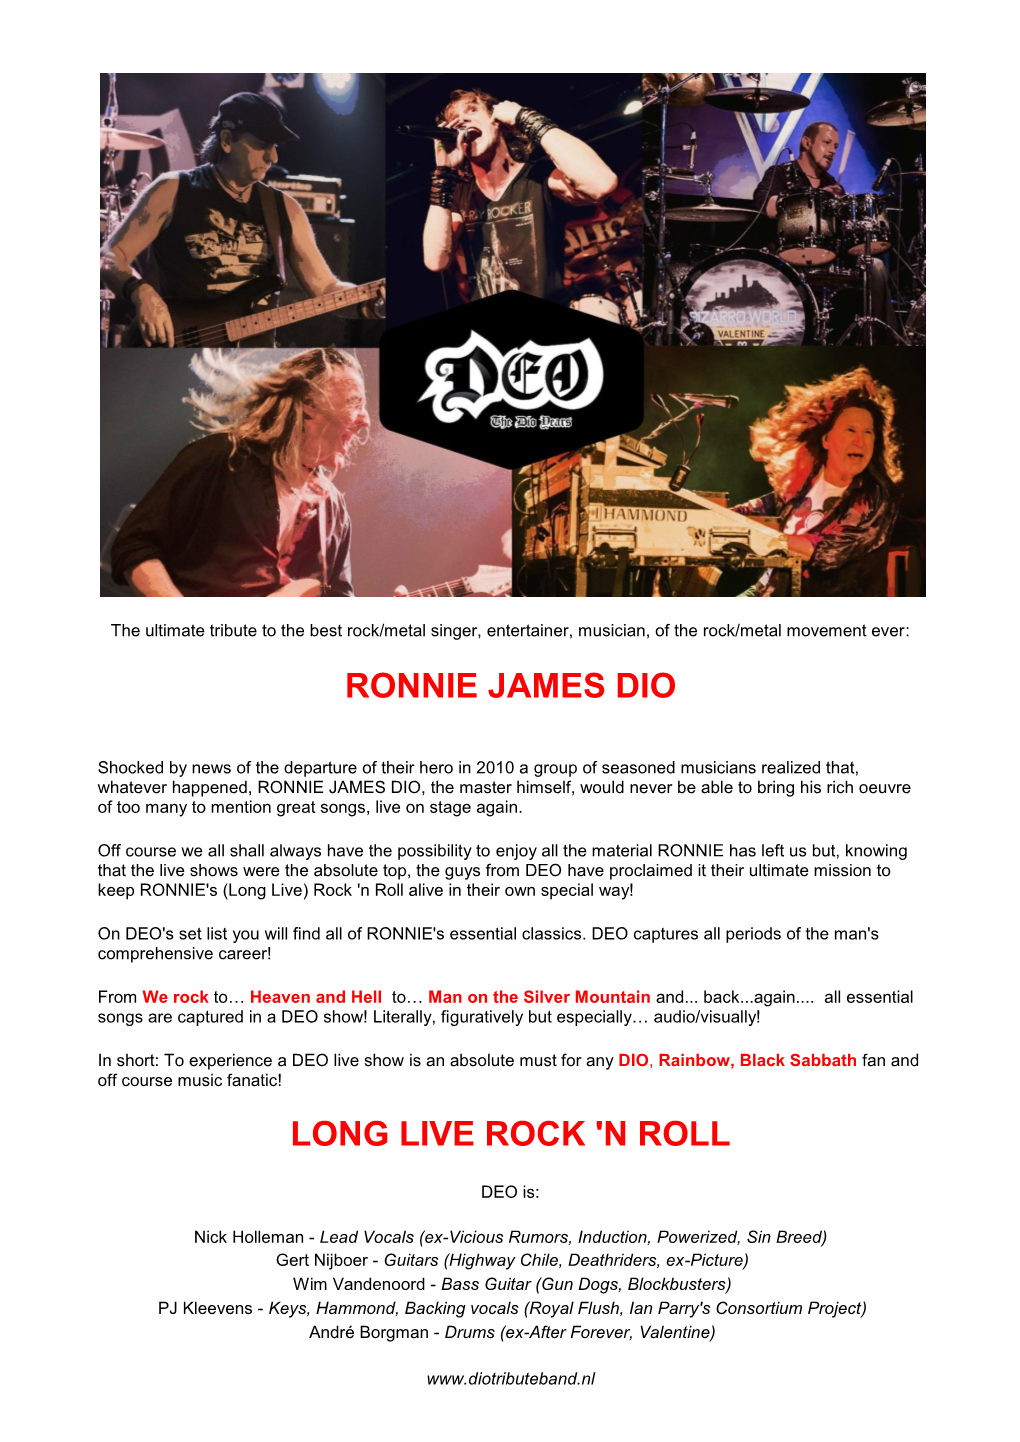 Ronnie James Dio Long Live Rock 'N Roll